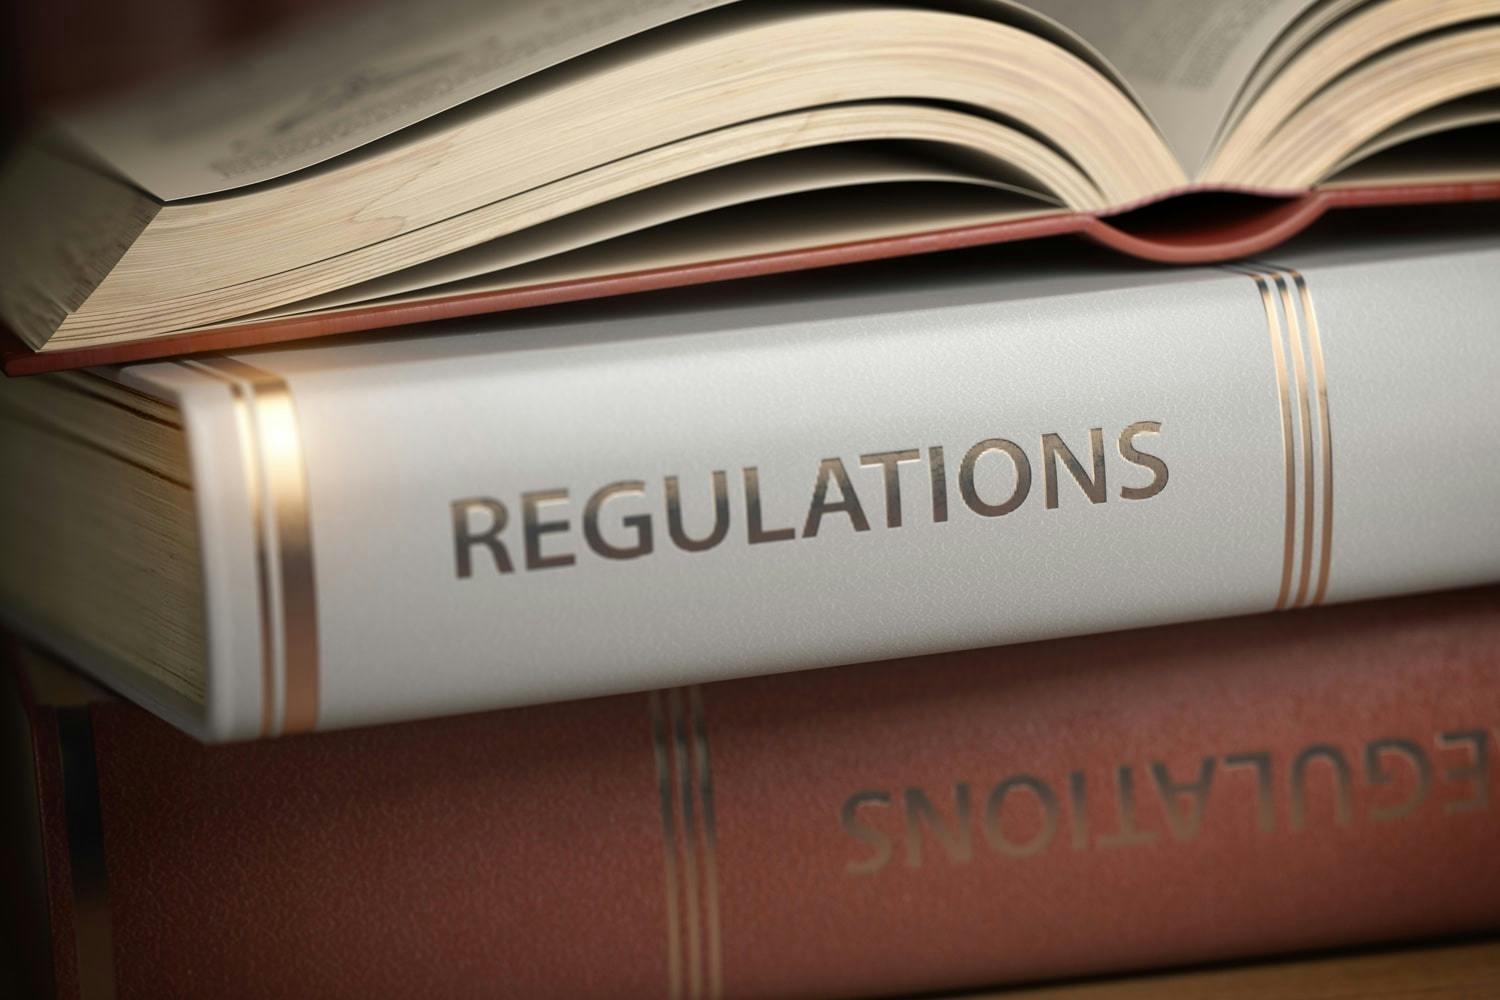 Regulatory & Compliance Advisorydiscription images